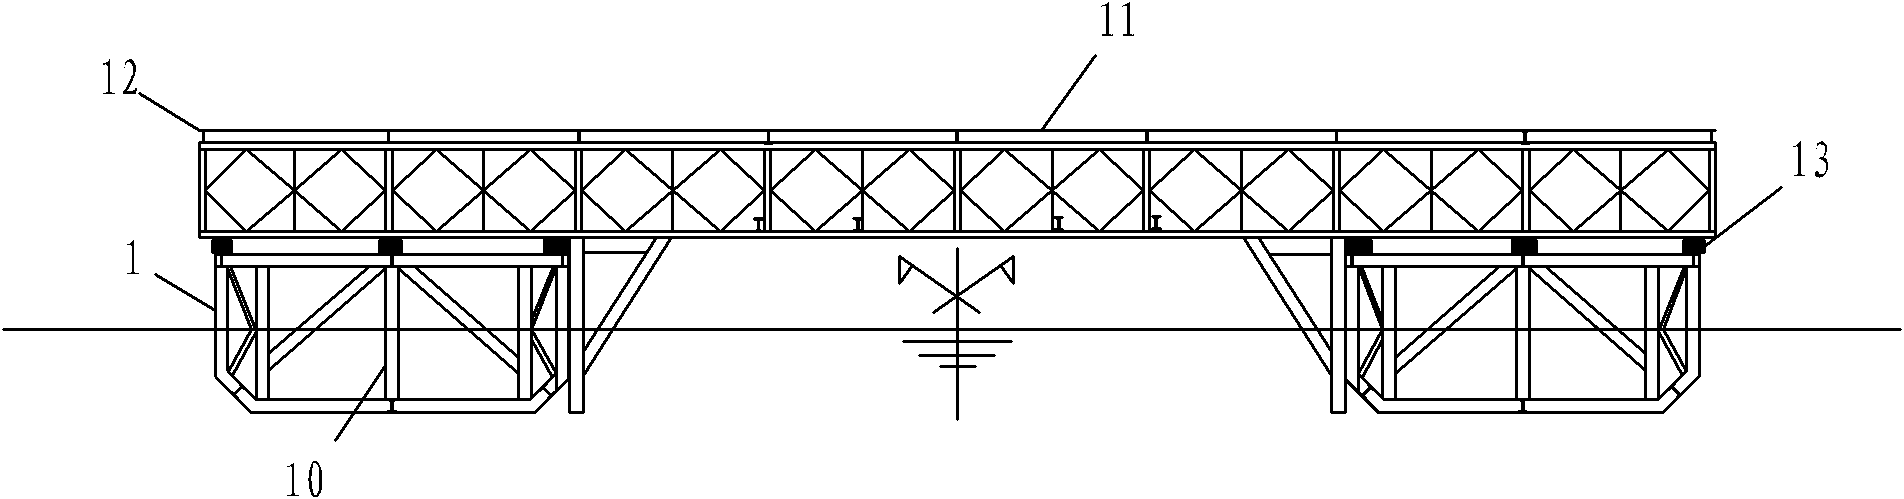 Method for constructing bridge deepwater foundation steel pile casing